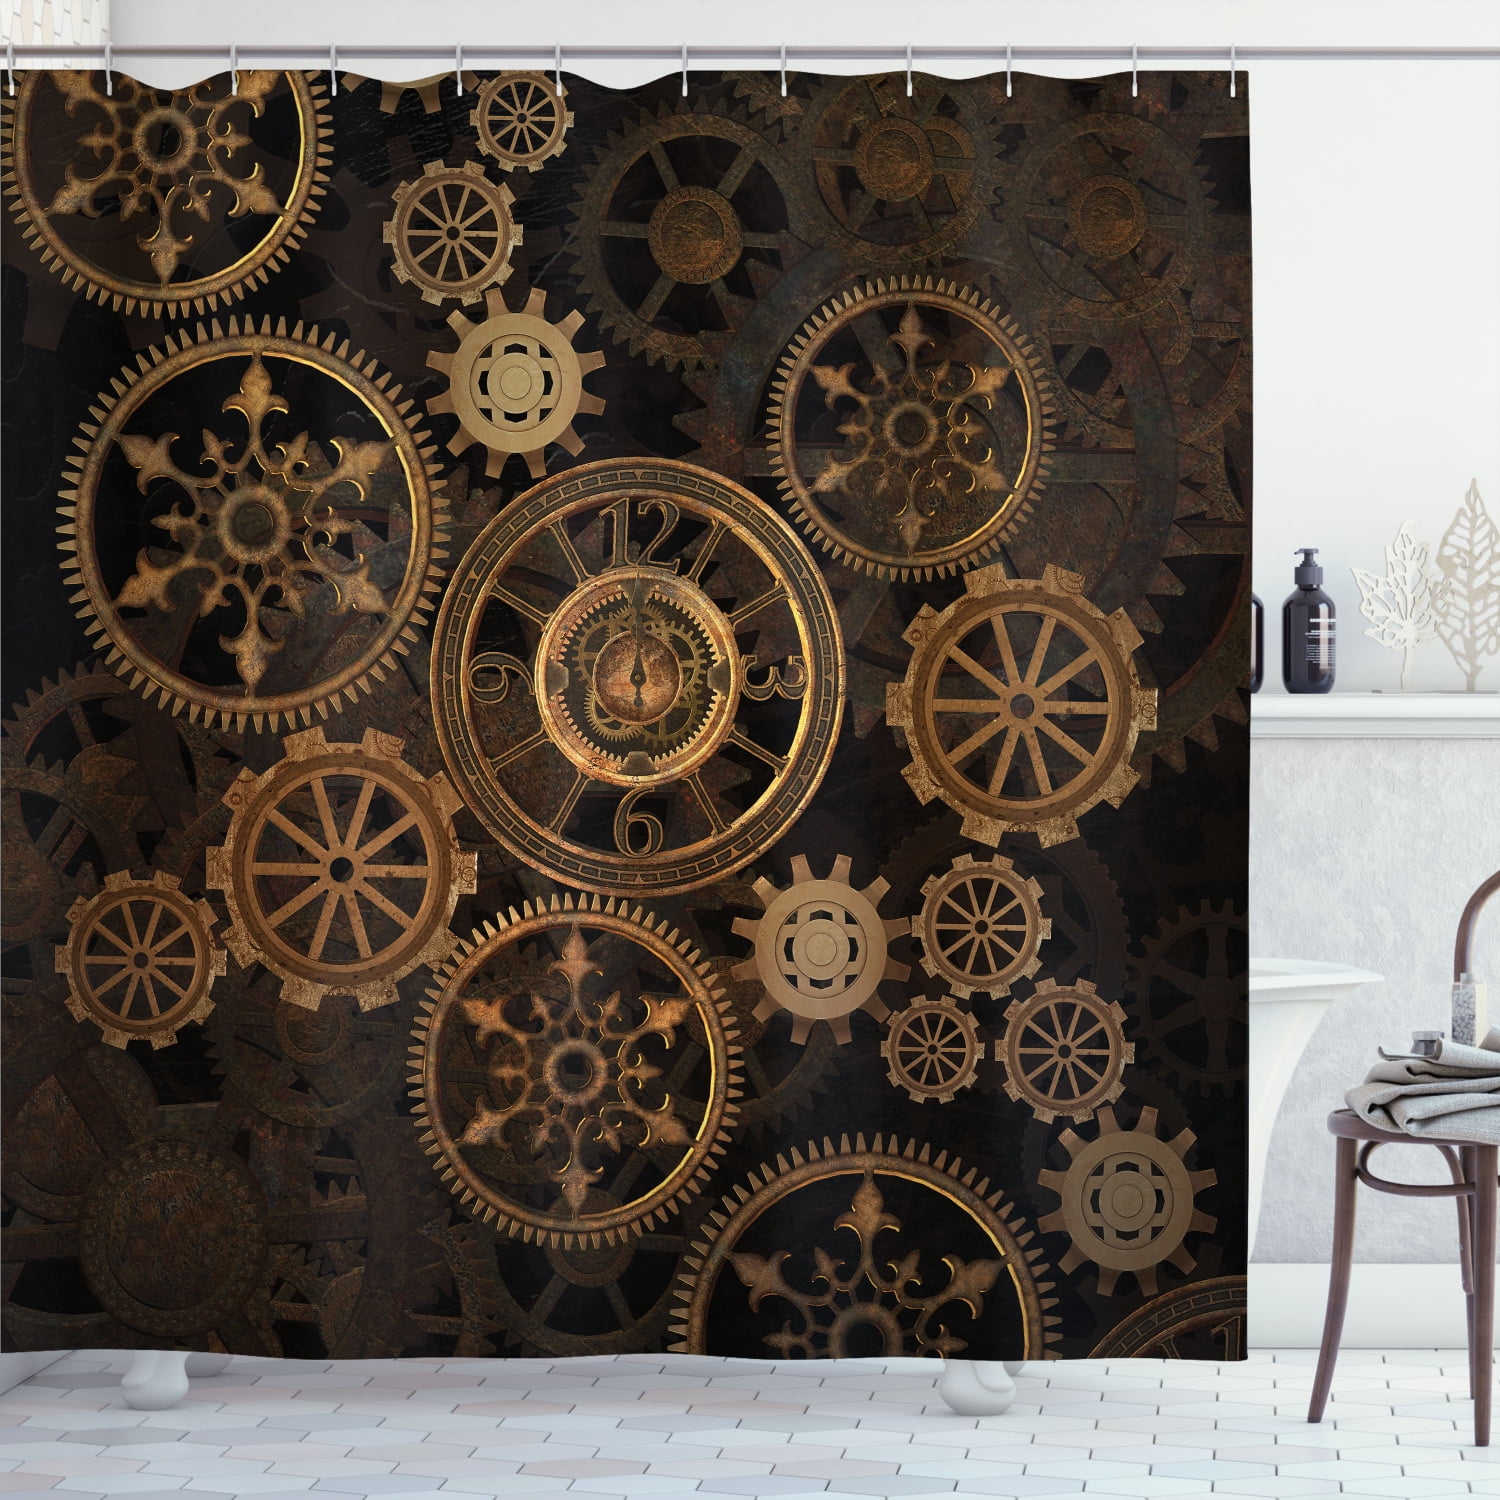 79" Rustic Steampunk Style Waterproof Fabric Shower Curtain Hooks Bathroom Liner 